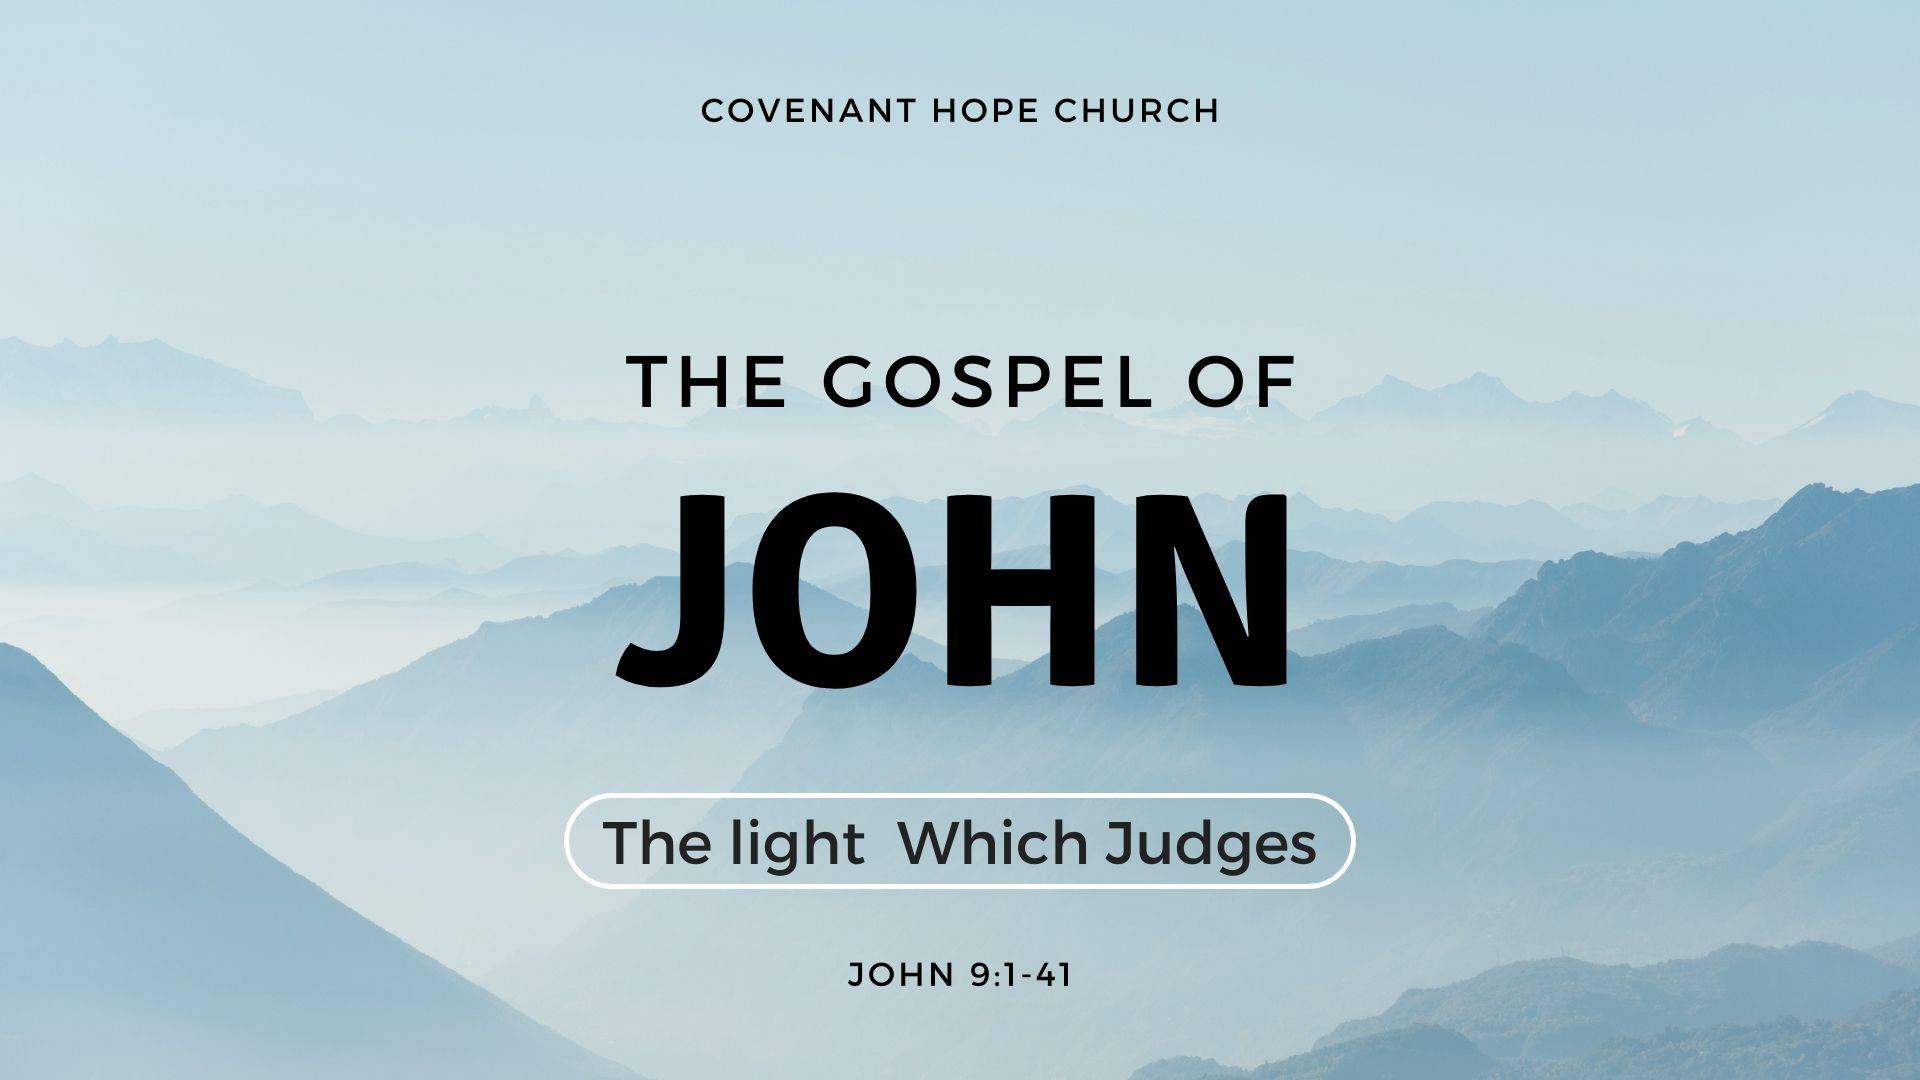 John 9:1-41 sermon at Covenant Hope Church in Dubai